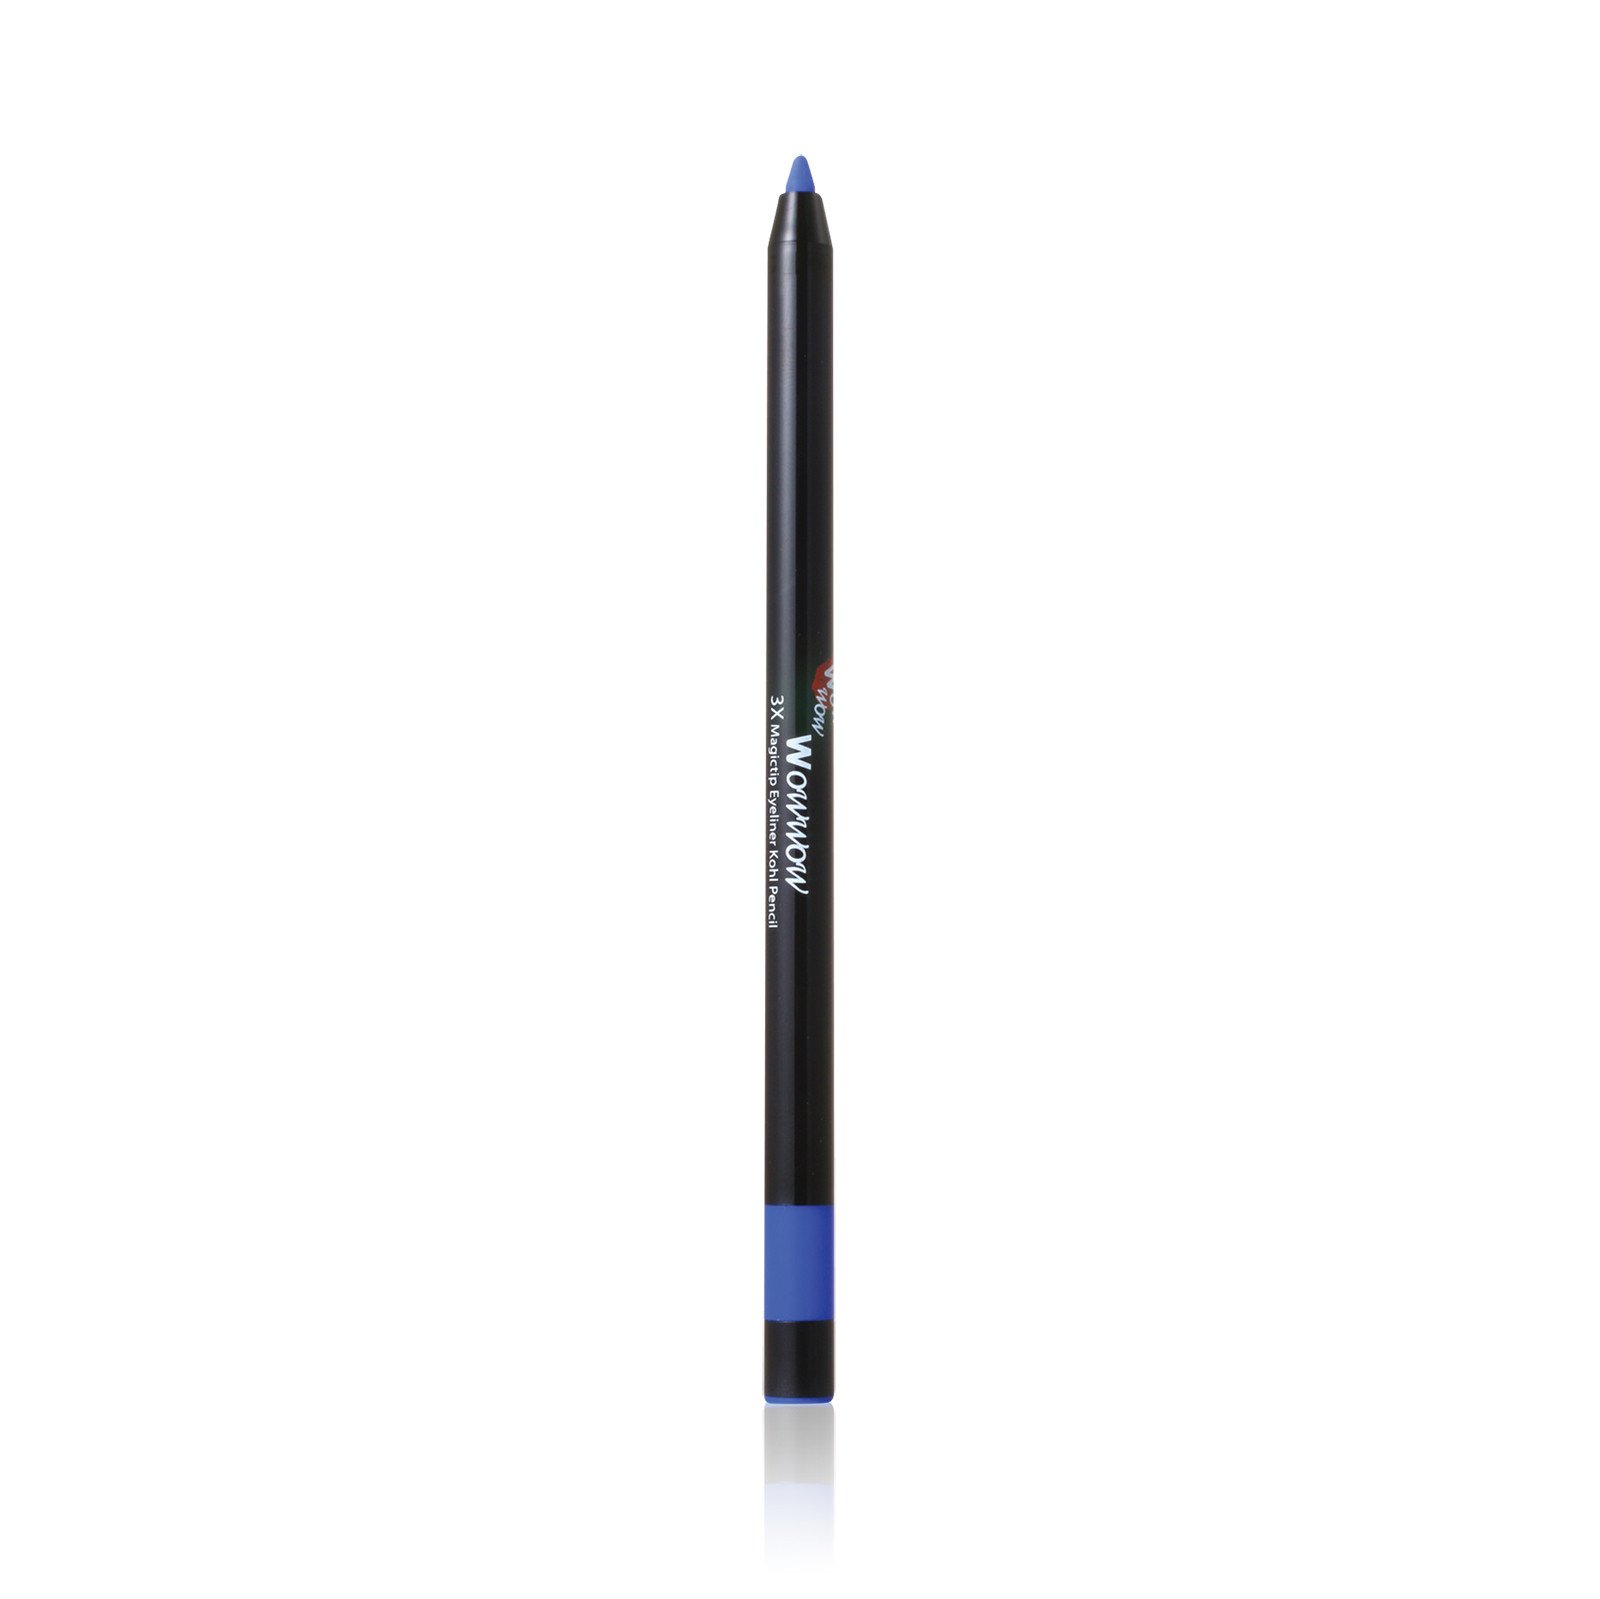 WOWWOW 3X Magictip Eyeliner Kohl Pencil 1pc #02 Blue